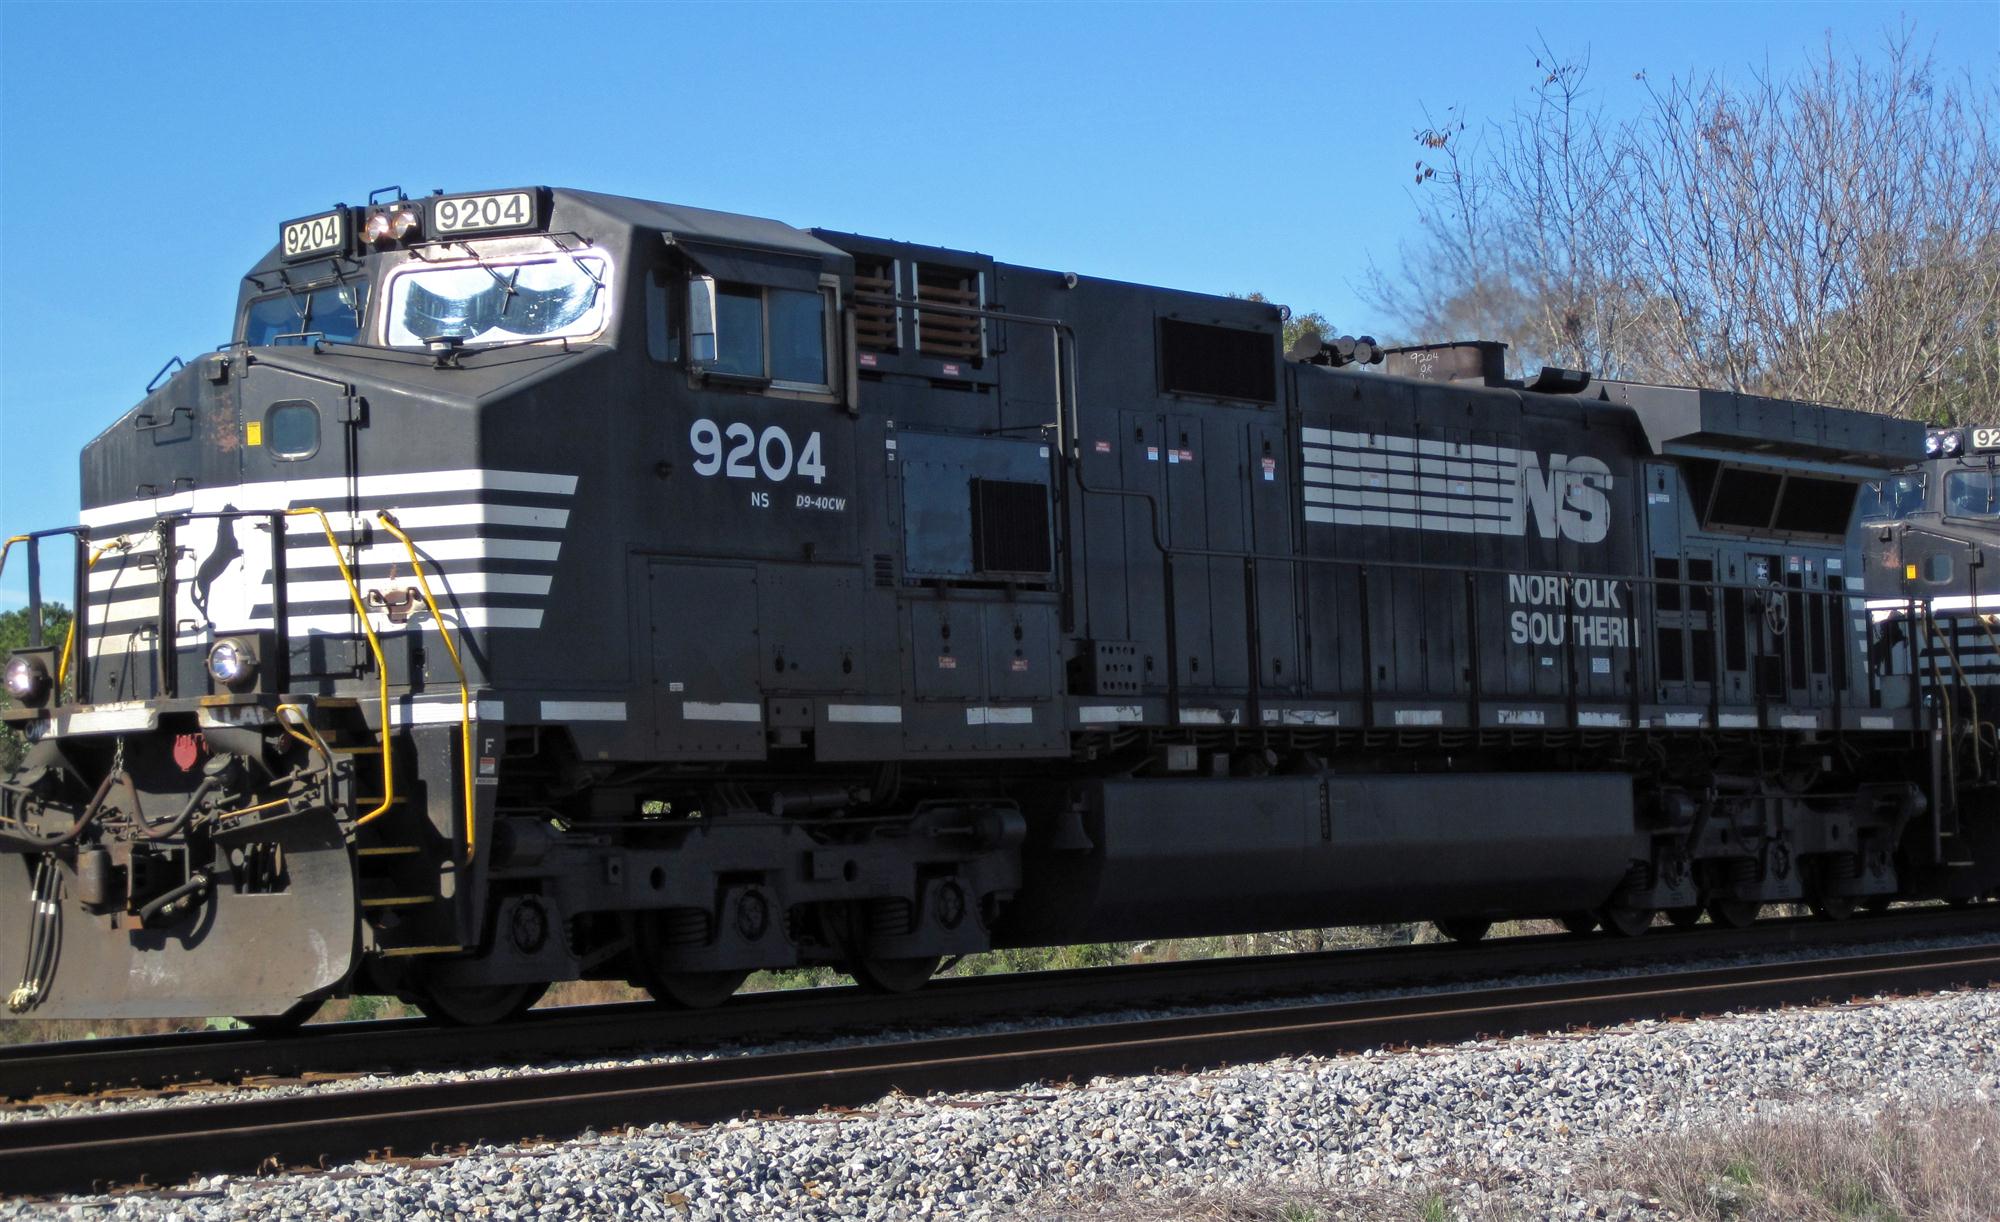 Self Photos / Files - Norfolk_Southern_Railway_-_9204_diesel_locomotive_(CW40-9)_(north_of_Inaha,_Georgia,_USA)_1_(22813045600)